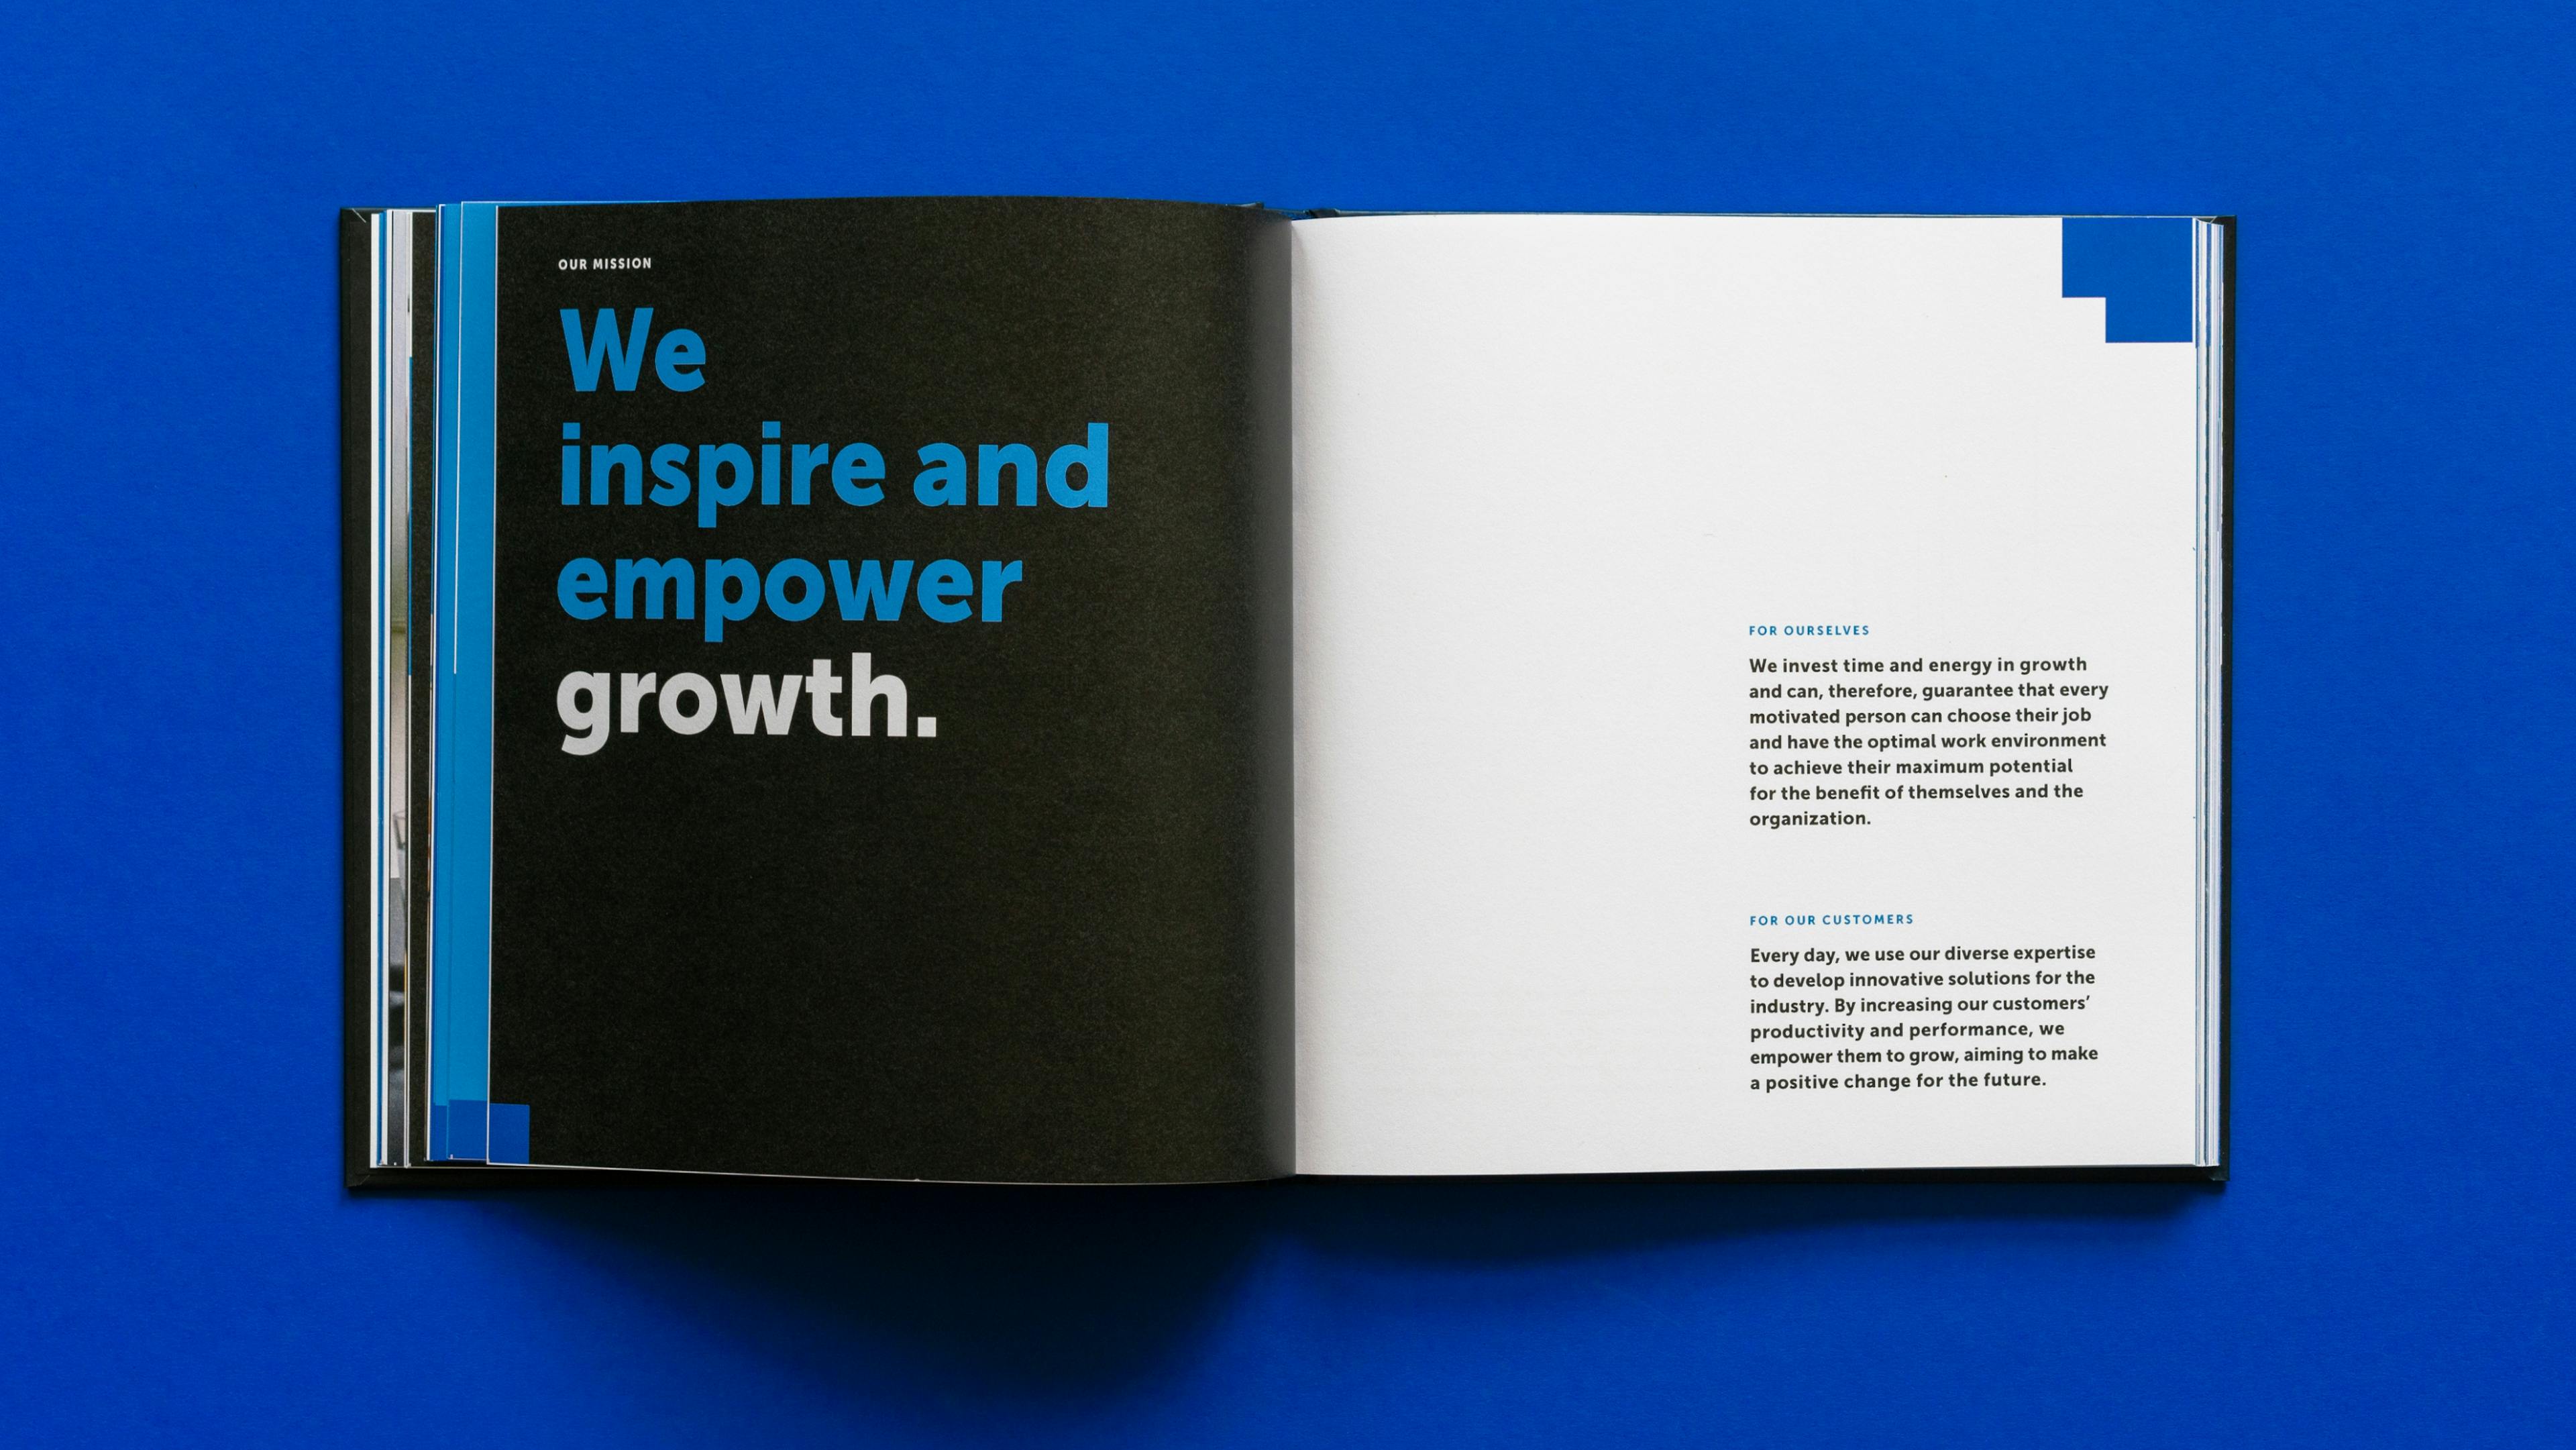 Doppelseite der craftworks Mission: We inspire and empower growth. © goodmatters